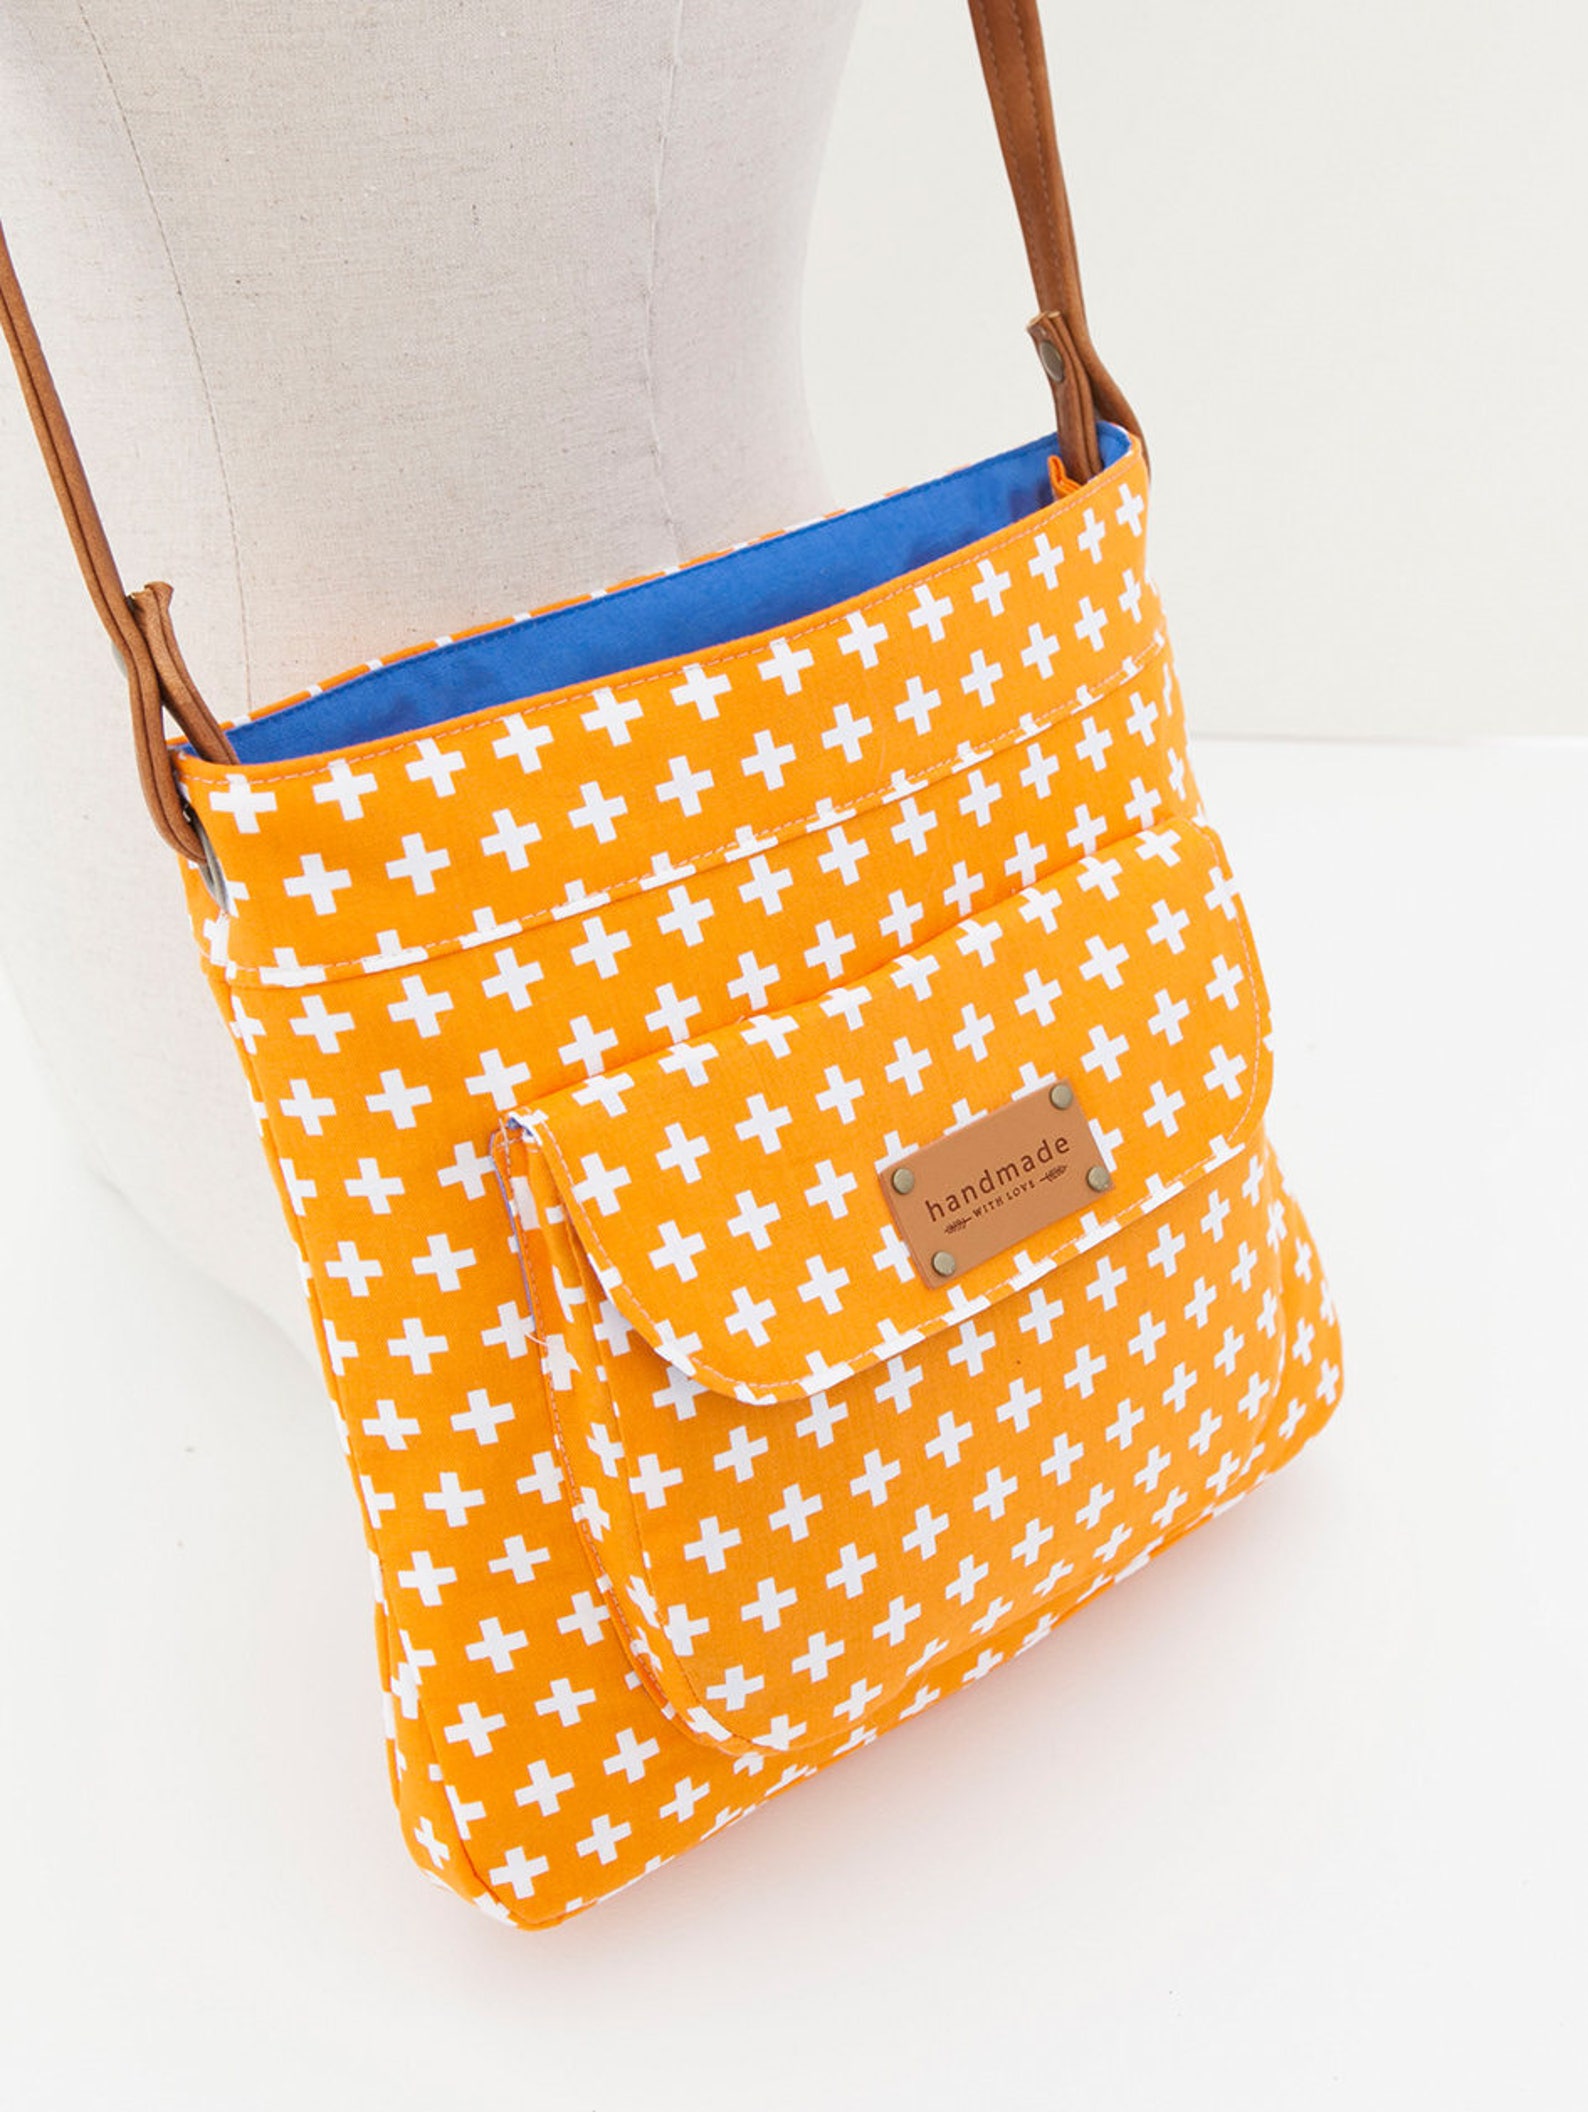 Jeannie Cross Bag PDF Sewing Pattern | Etsy